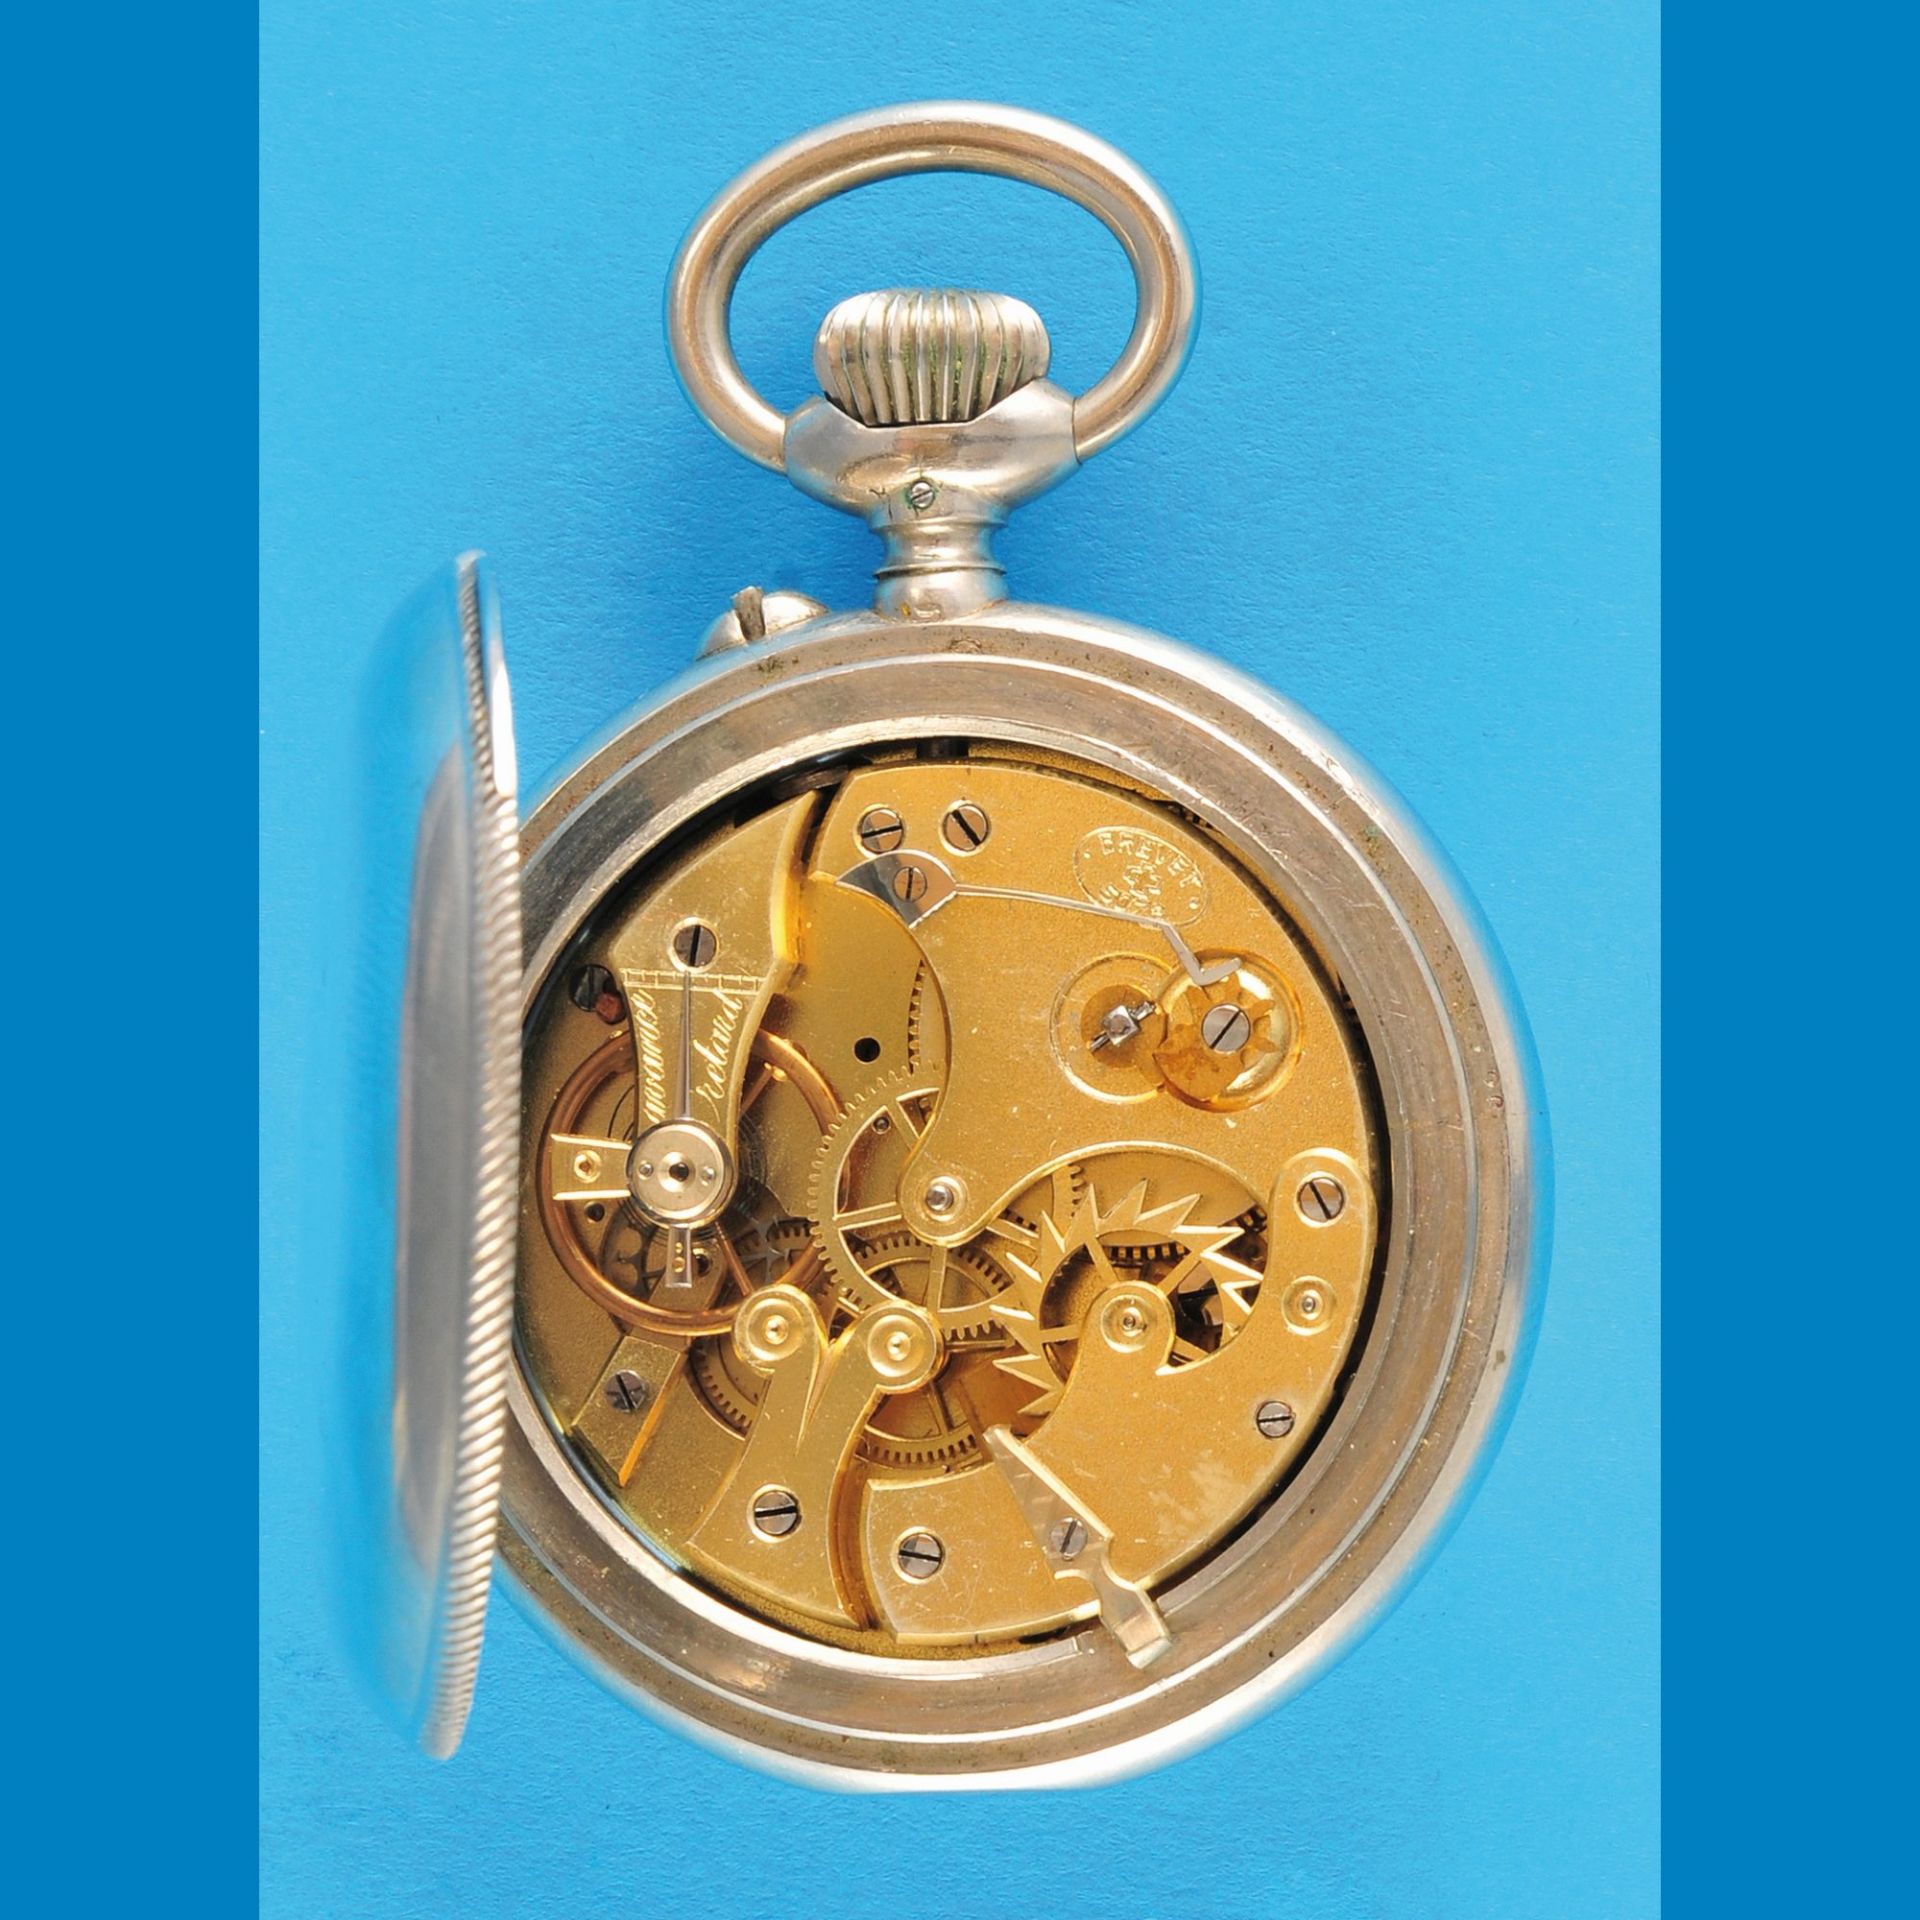 Nickel pocket watch, Swiss Patent No. 5073